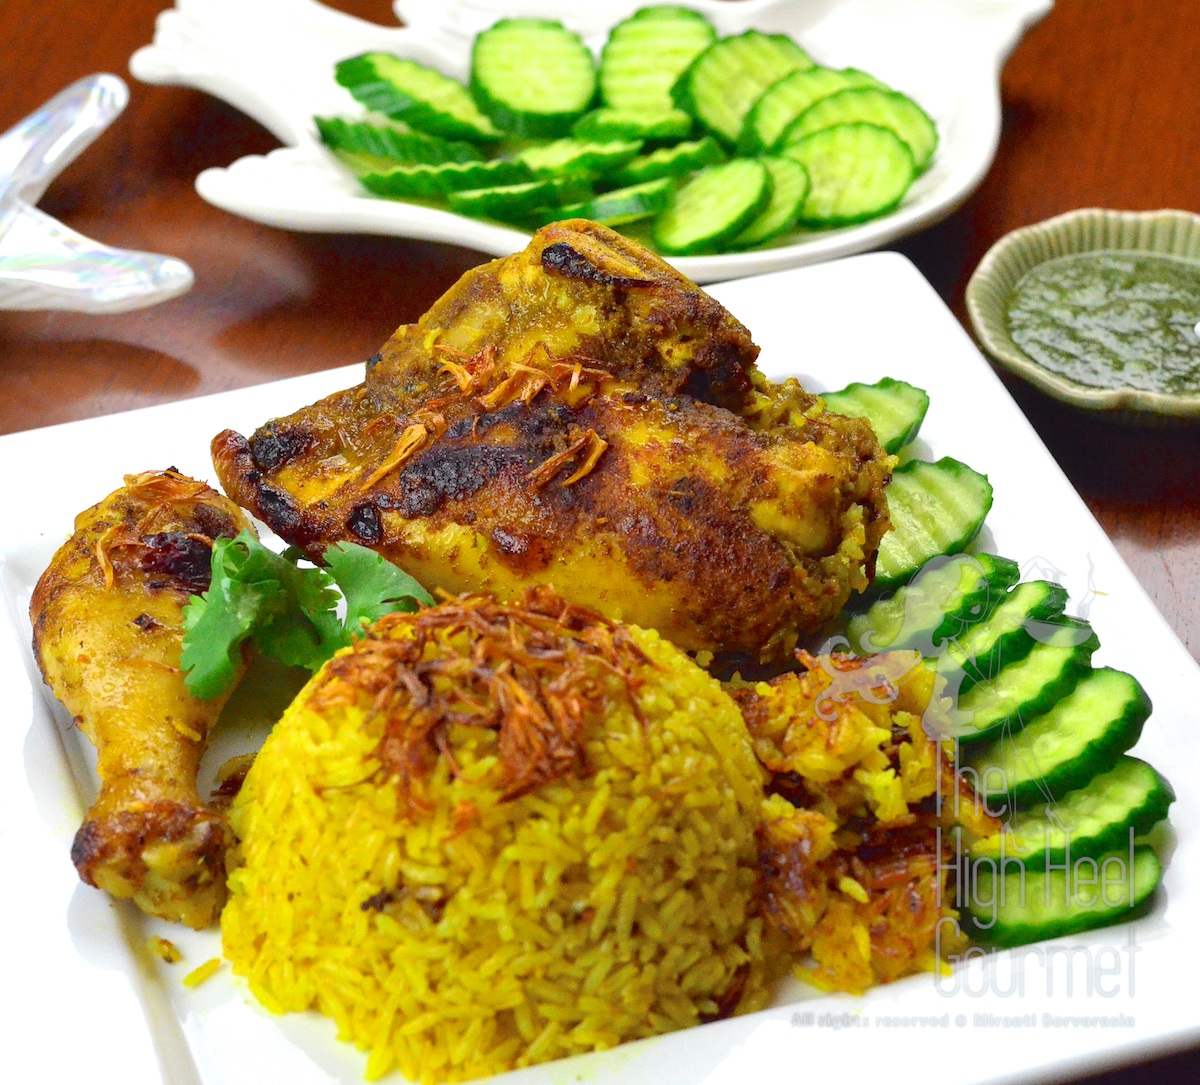 Thai Halal Chicken Rice Briyani - Khao Mok Gai by The High Heel Gourmet 20